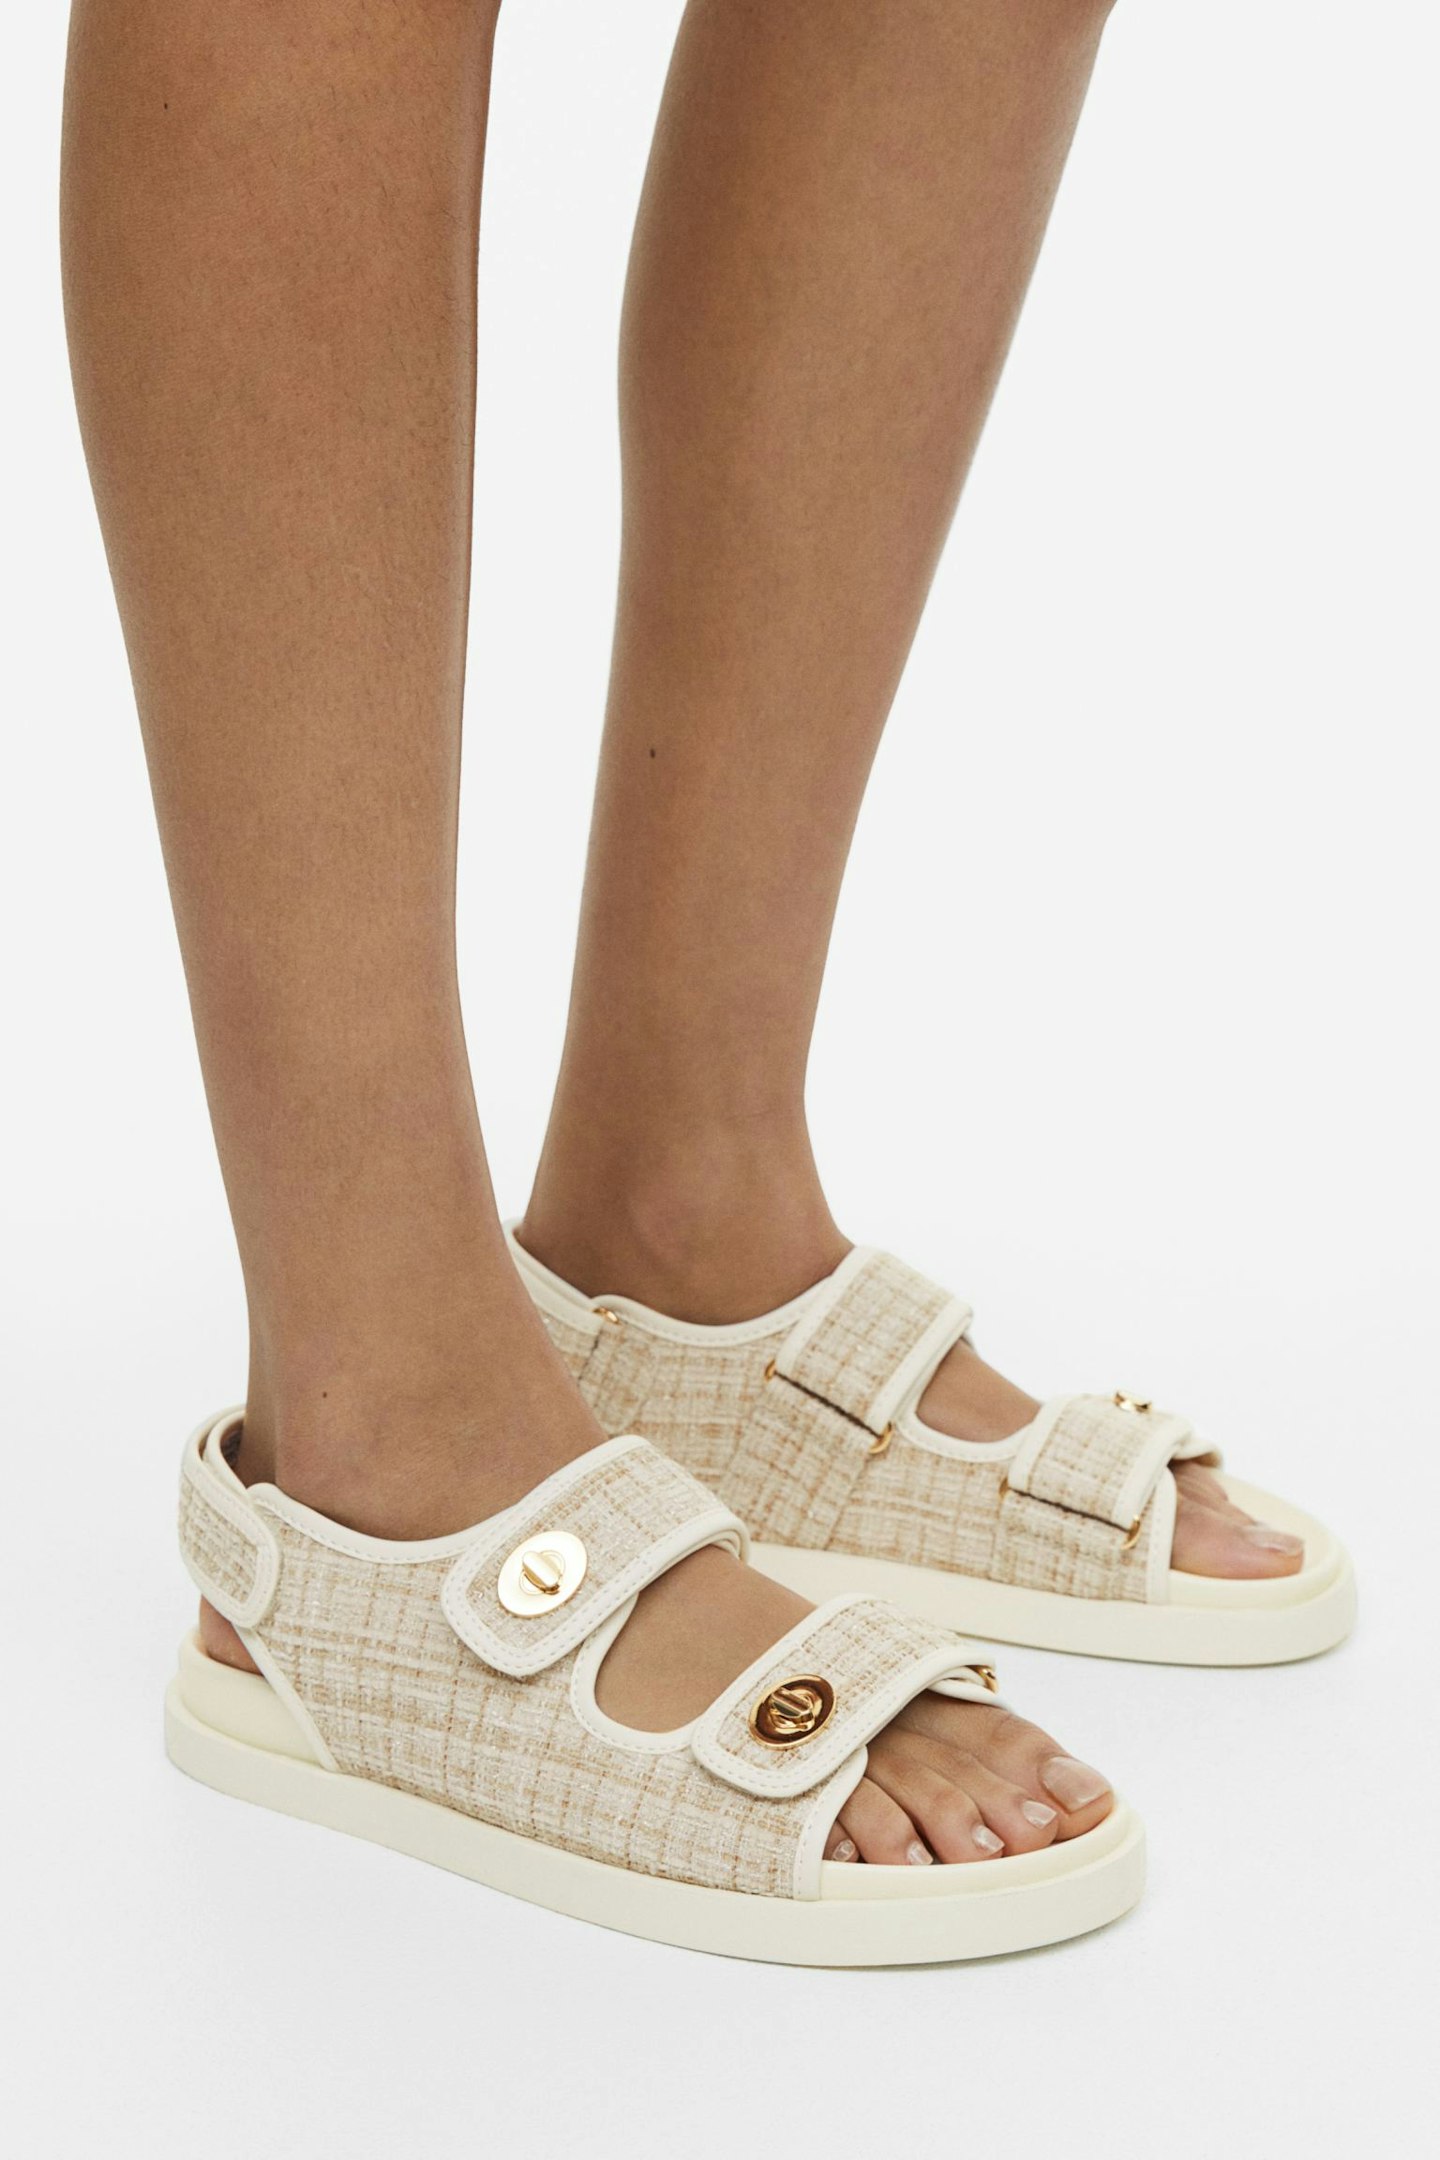 Chanel Sandals for Women: Shop Online Now